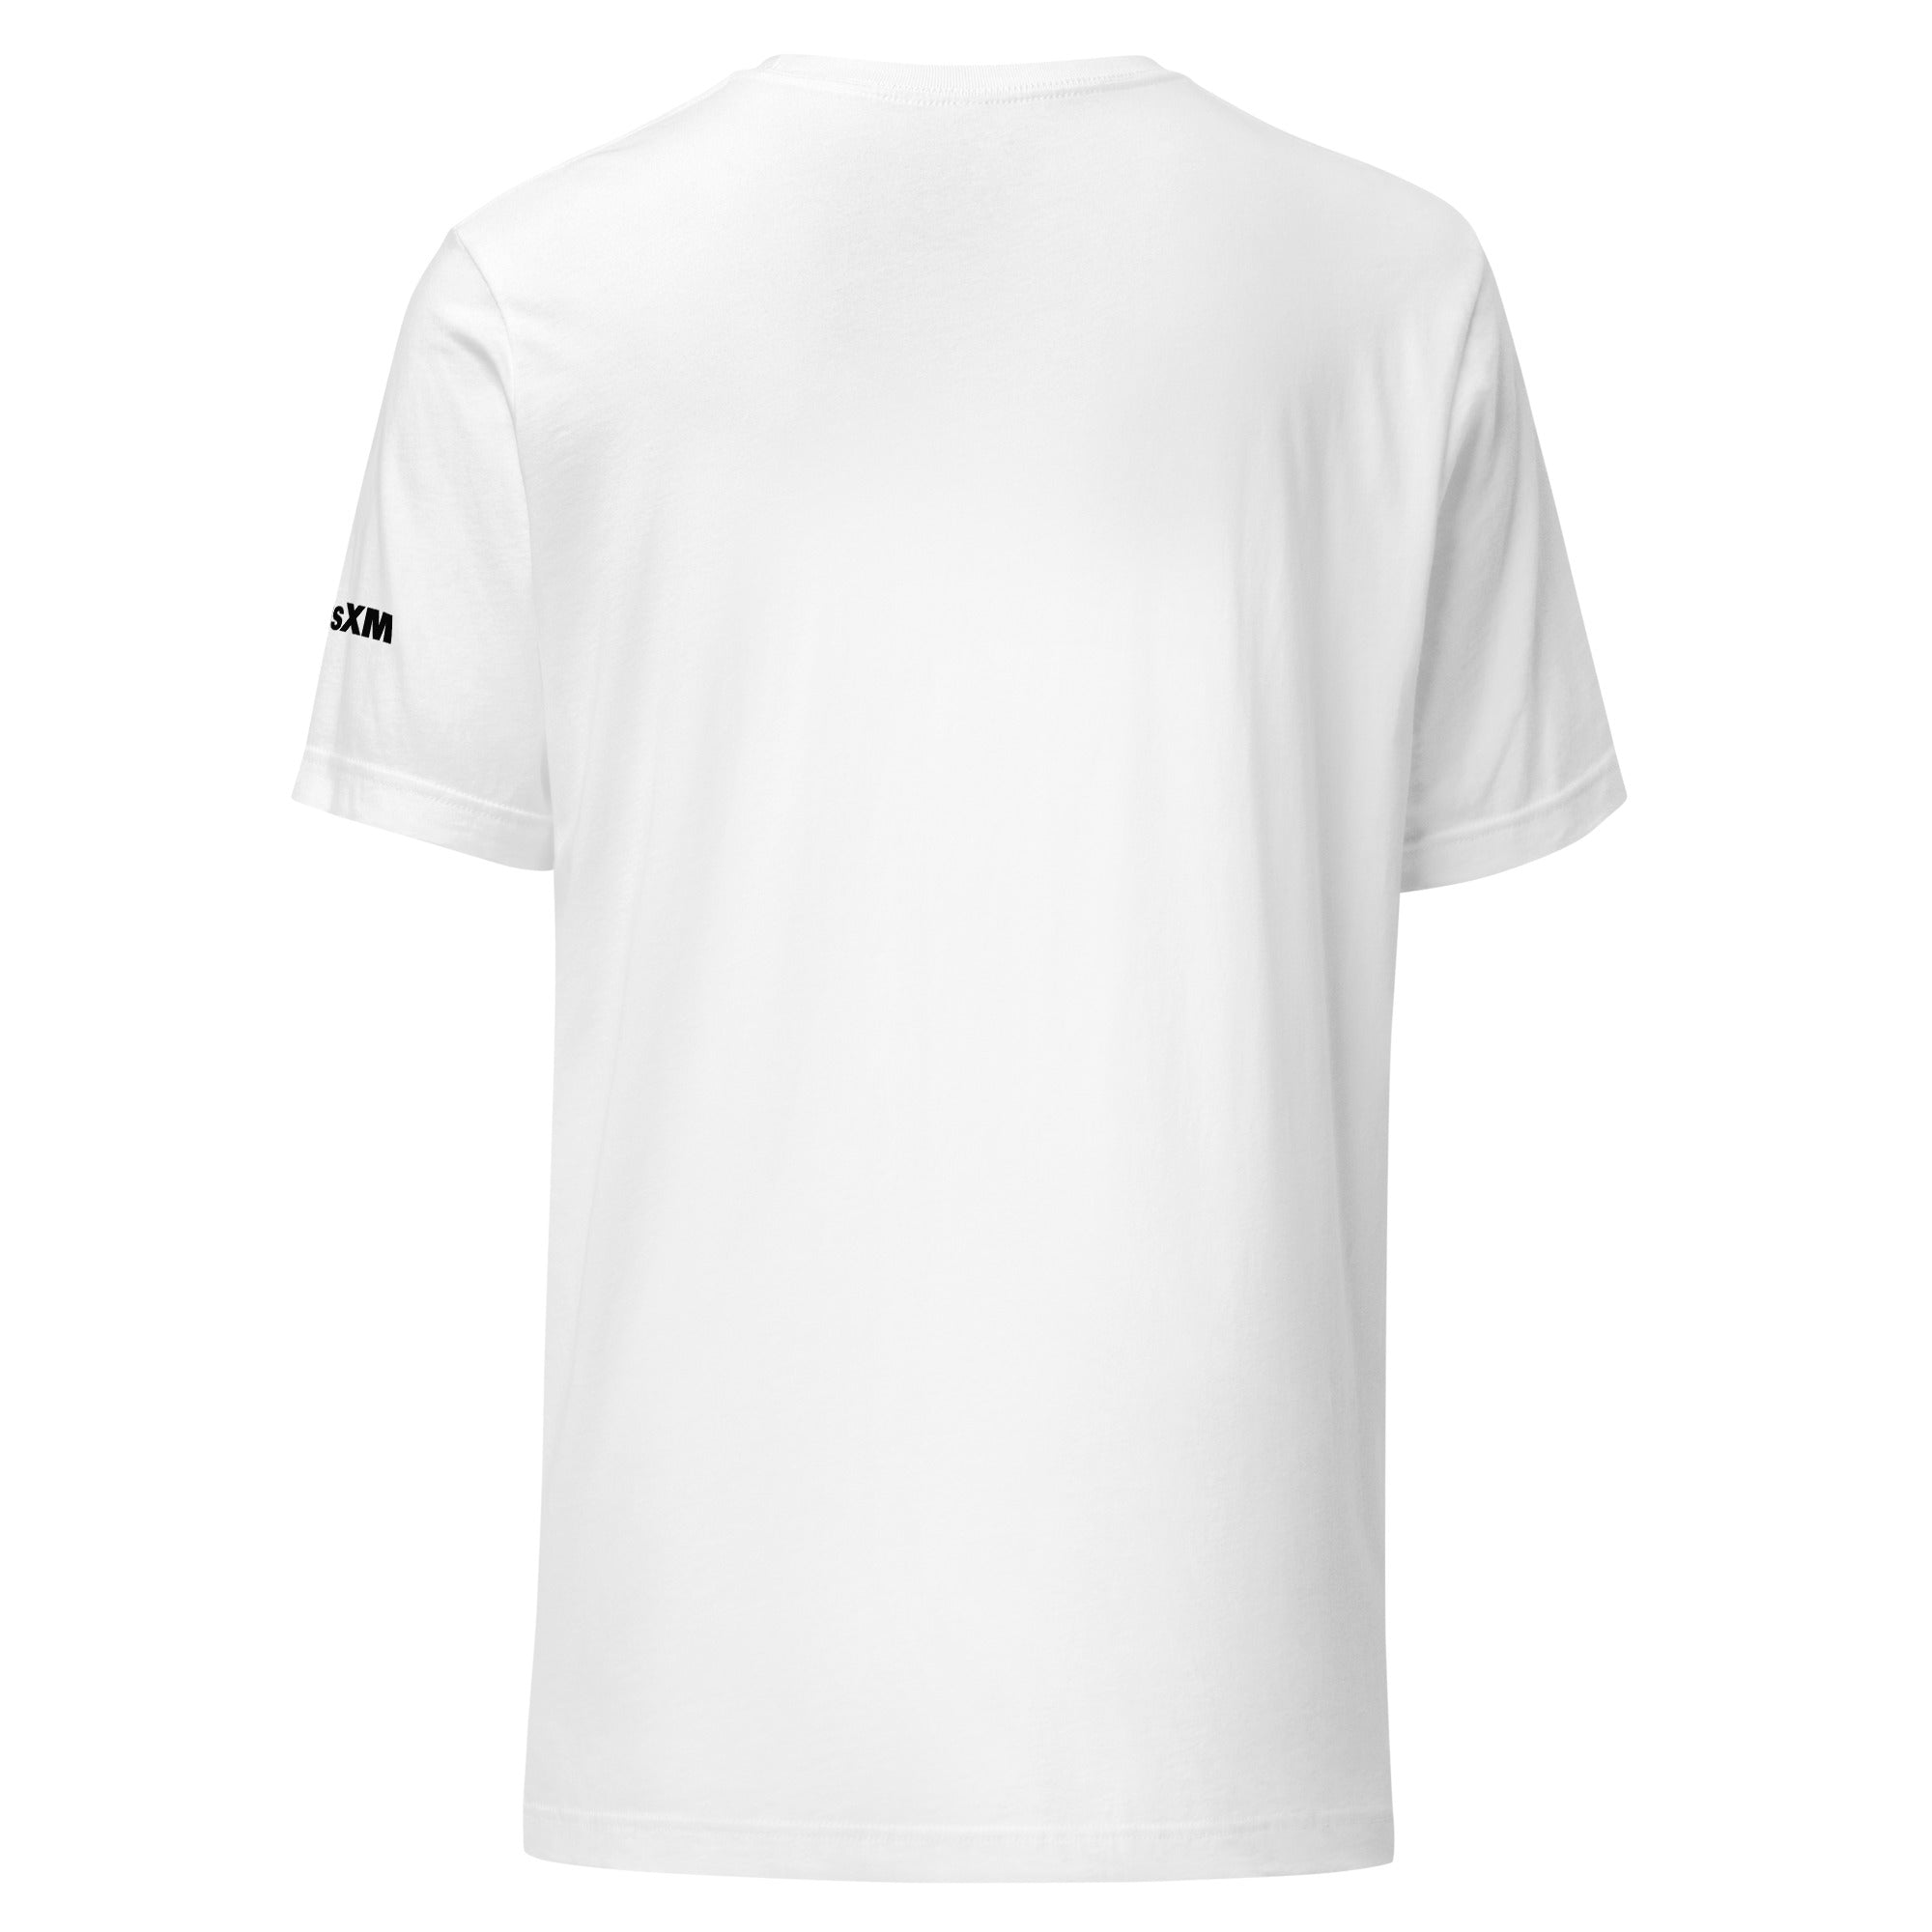 Heart & Soul: T-shirt (White)